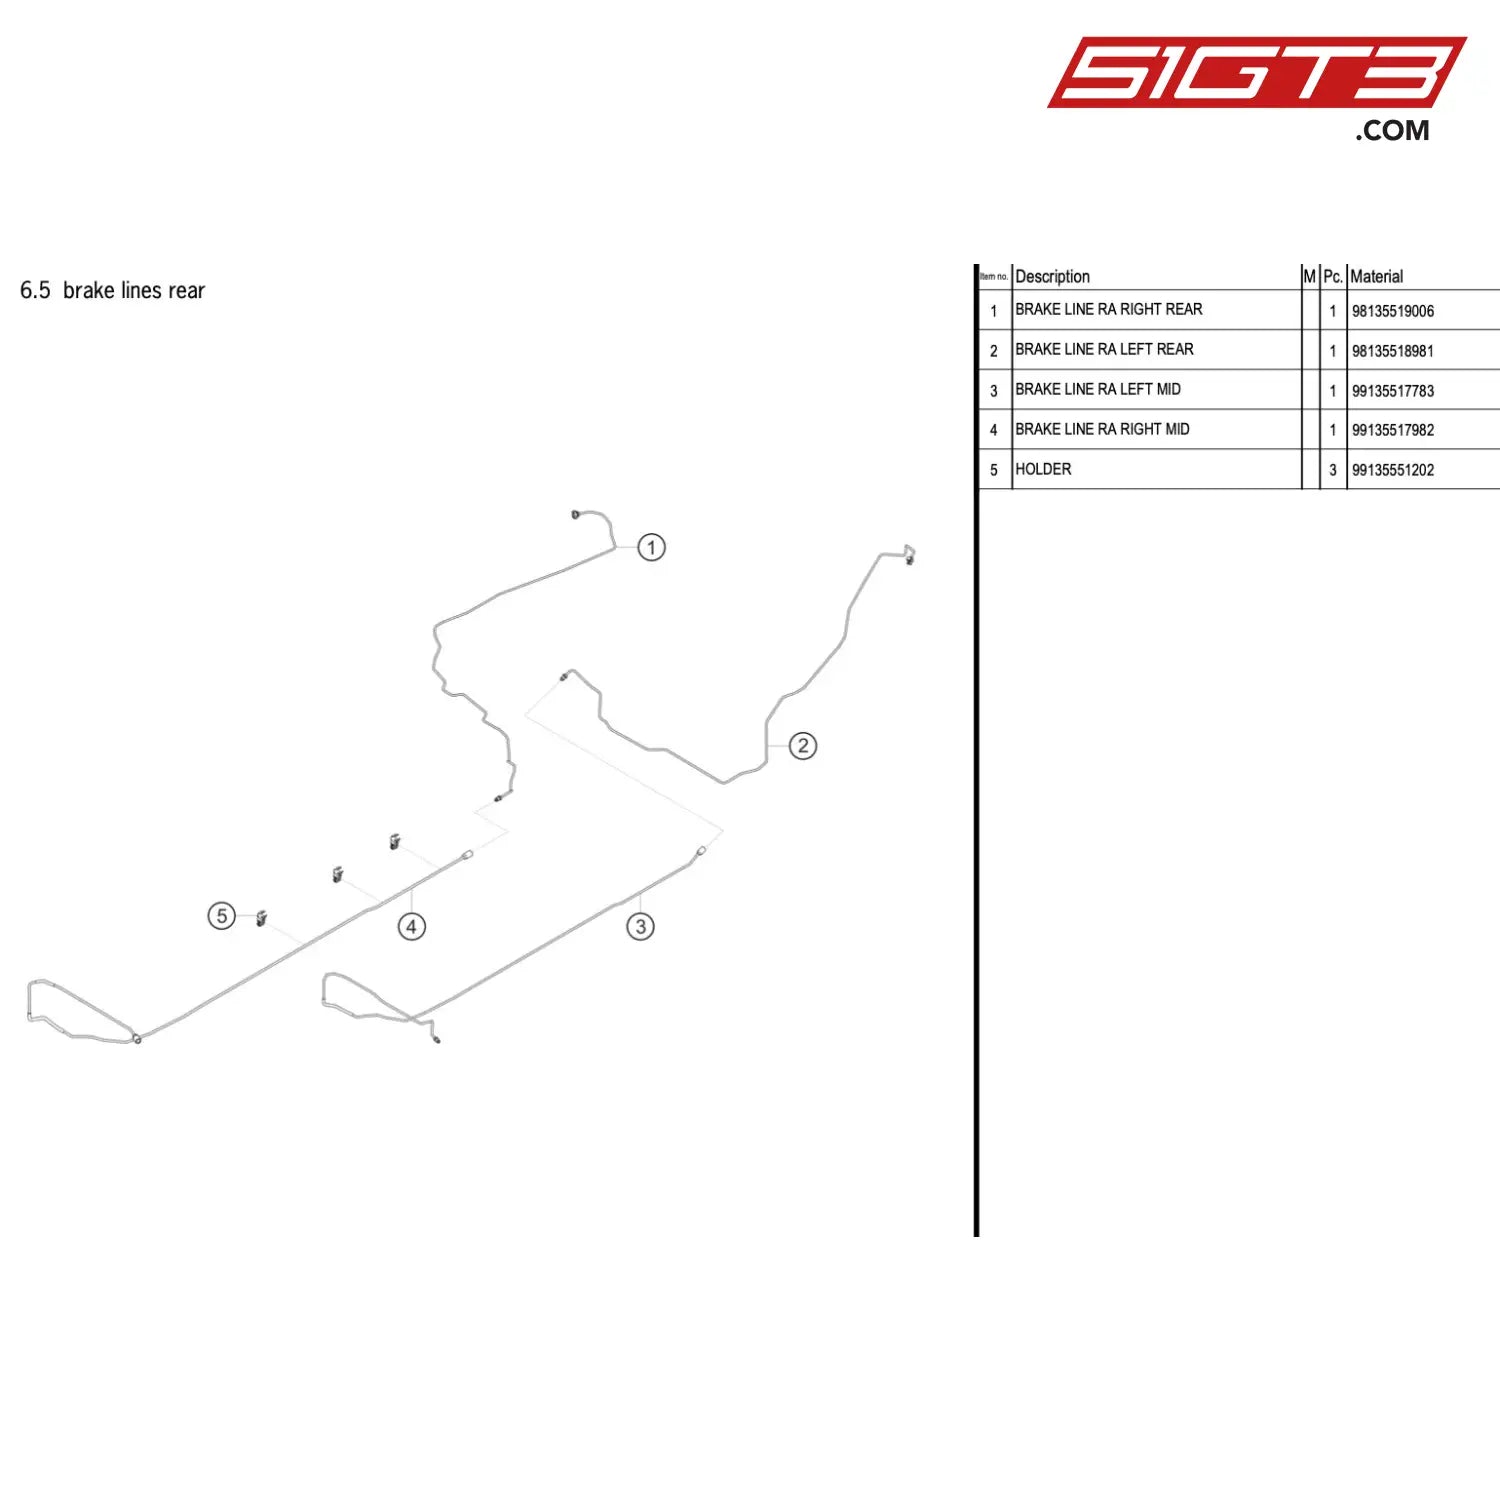 Brake Line Ra Right Rear - 98135519006 [Porsche 718 Cayman Gt4 Rs Clubsport] Brake Lines Rear